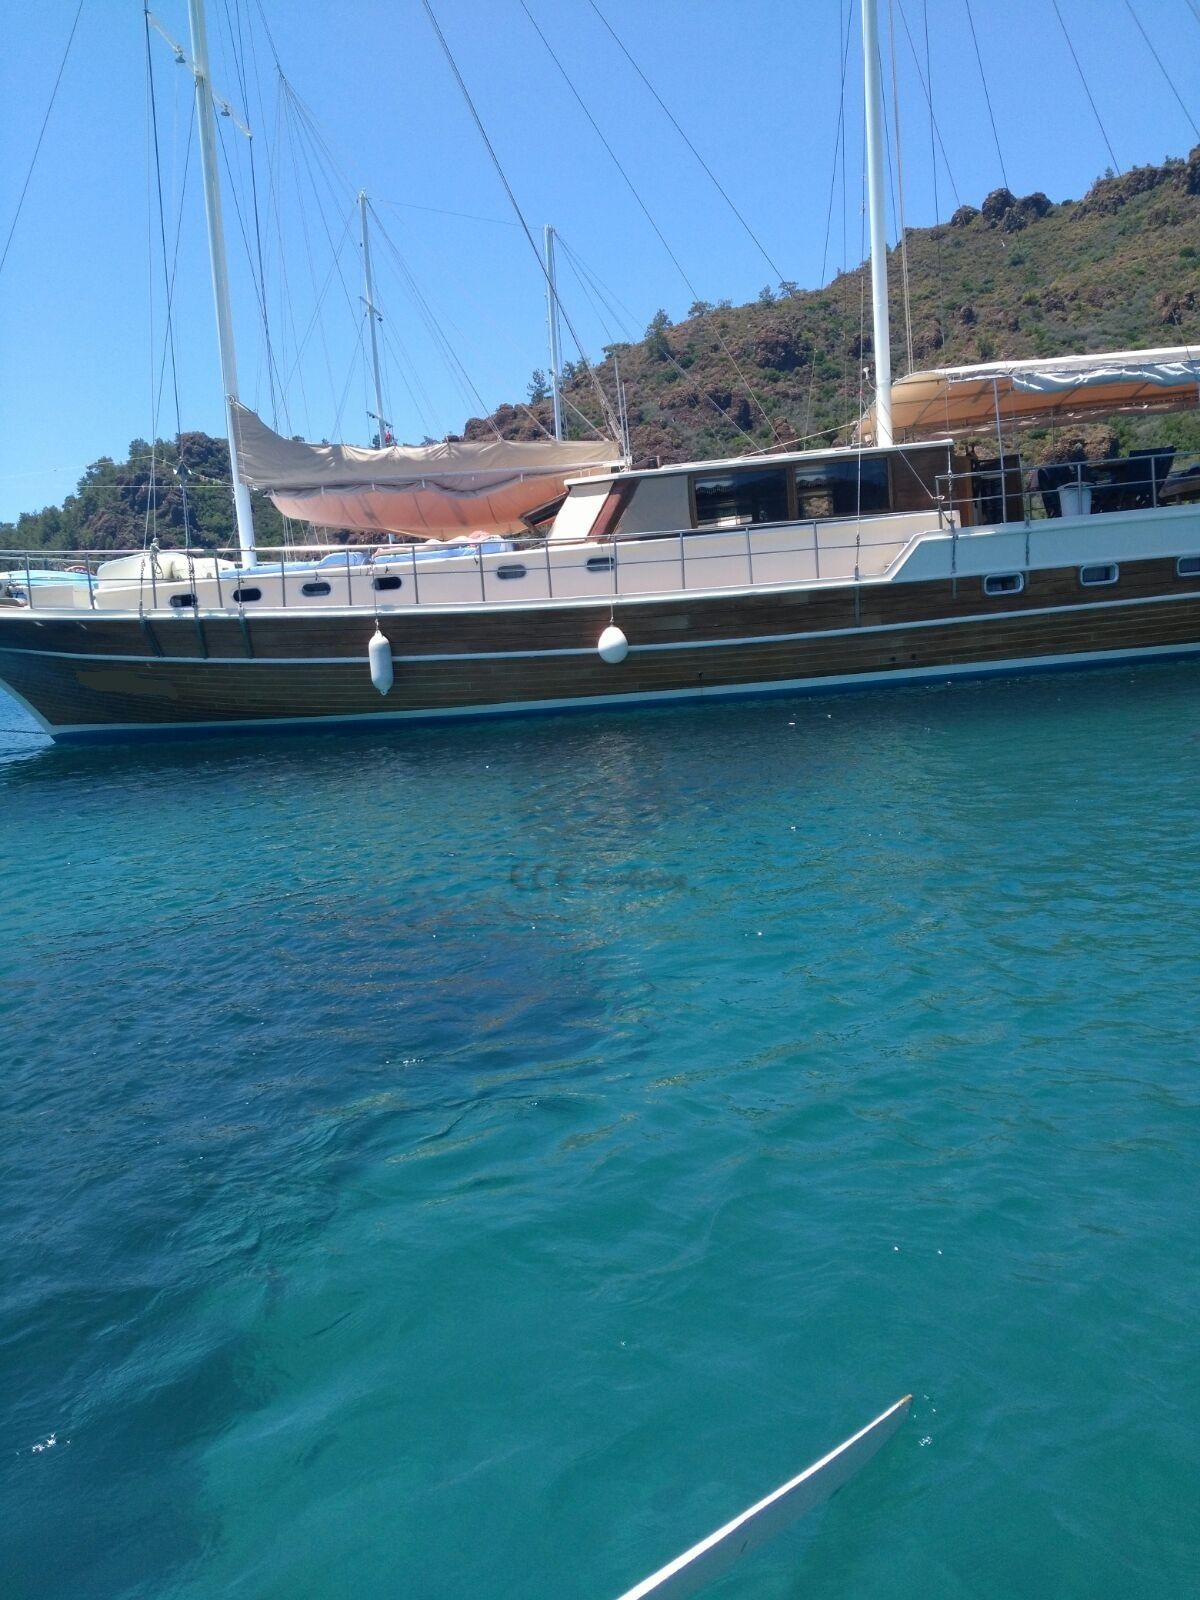 gamze teknesi.  Gamze Yacht, Turquoise, The Colour Of Turkey. 